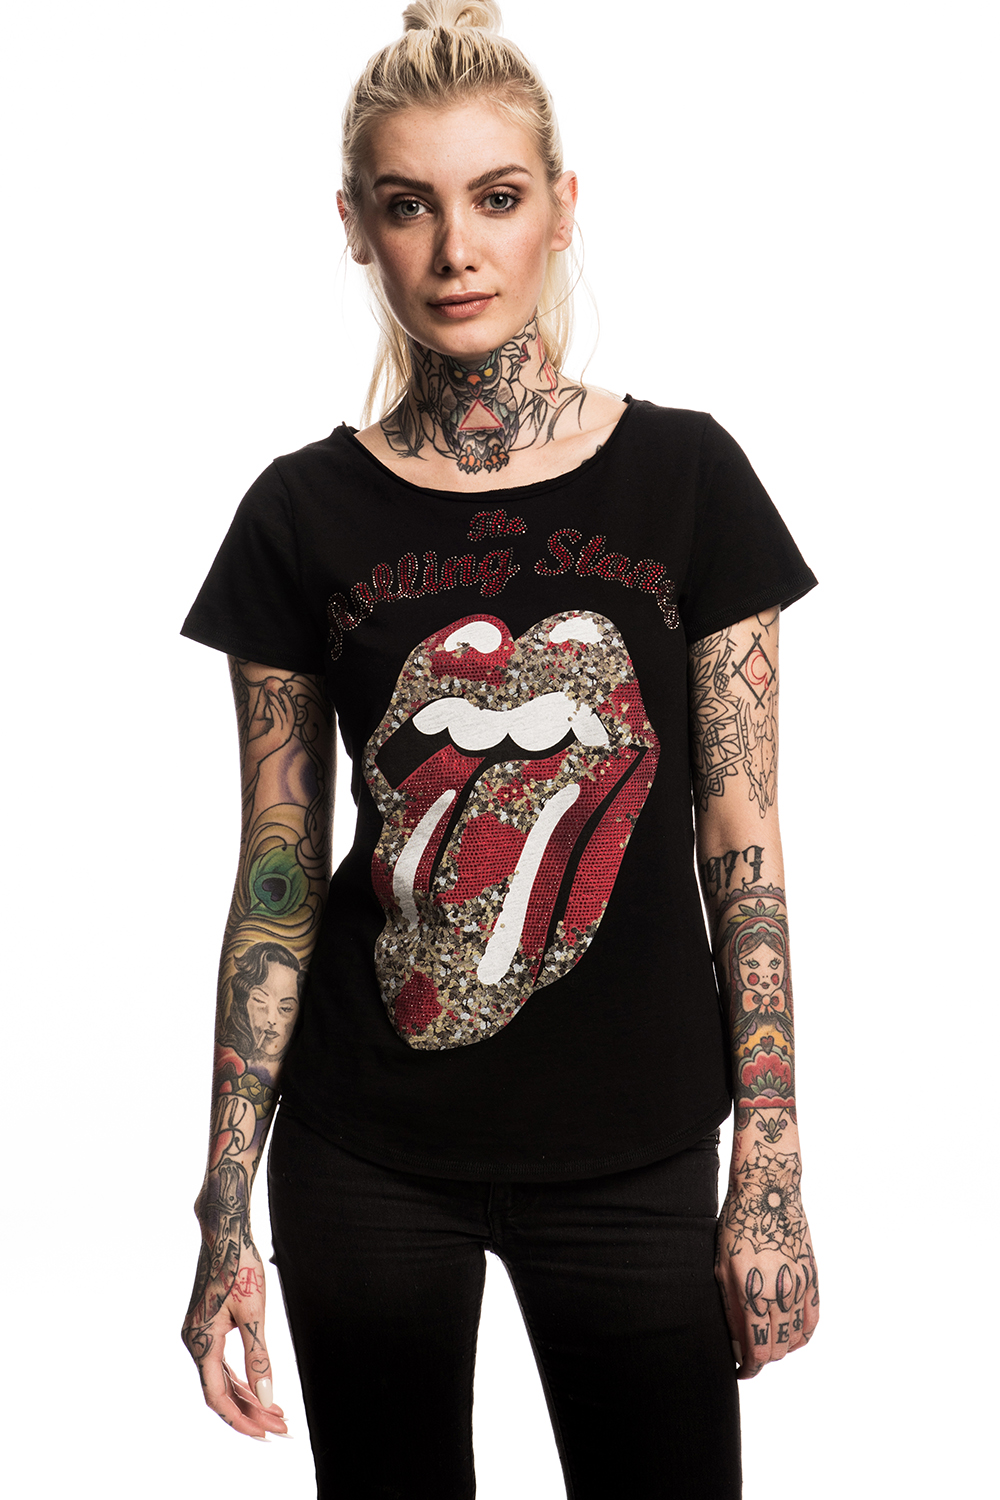 Bravado - Sound Array Glitter Tongue - The Rolling Stones - Girlie Shirt